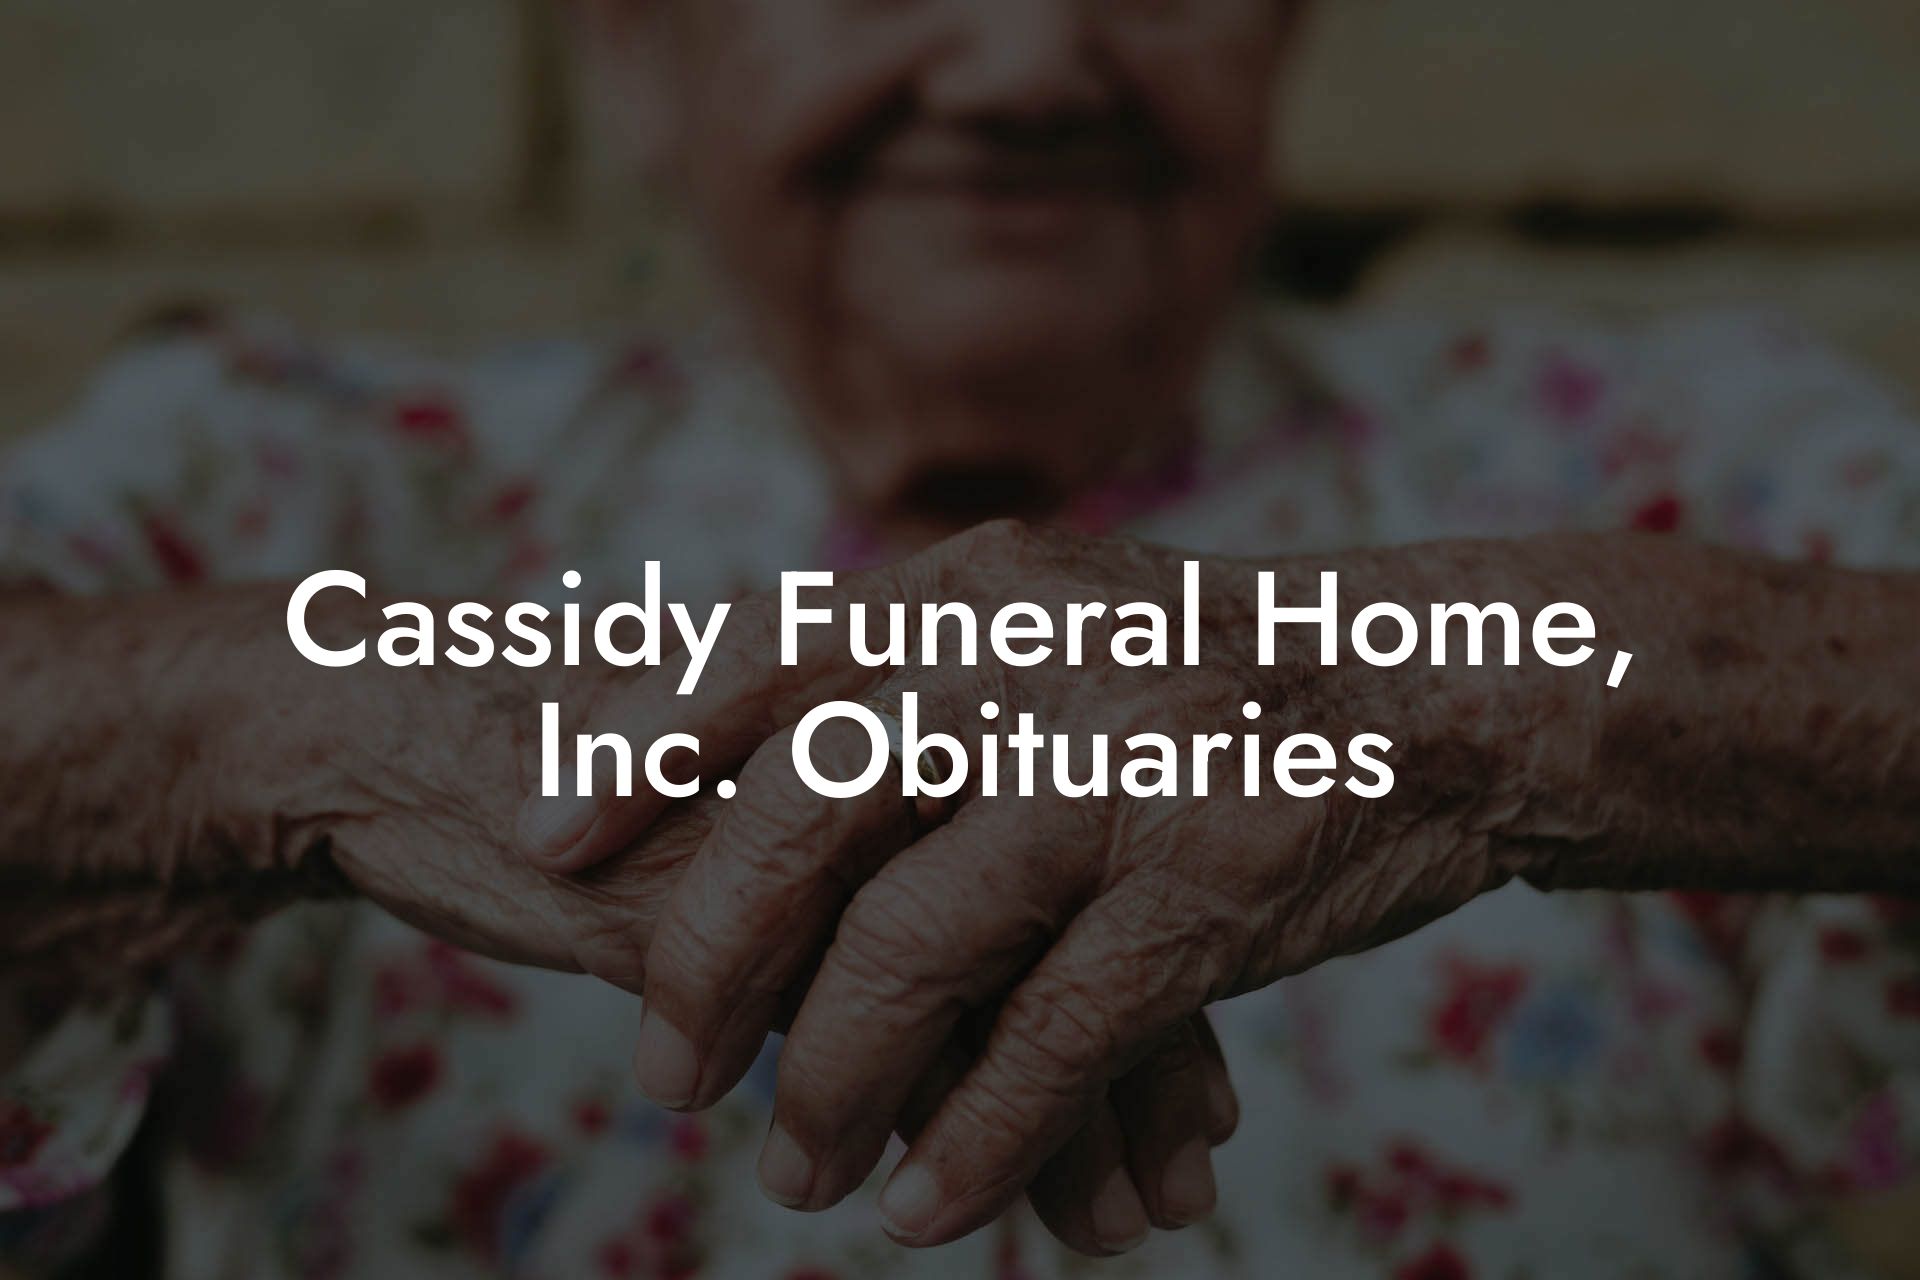 Cassidy Funeral Home, Inc. Obituaries